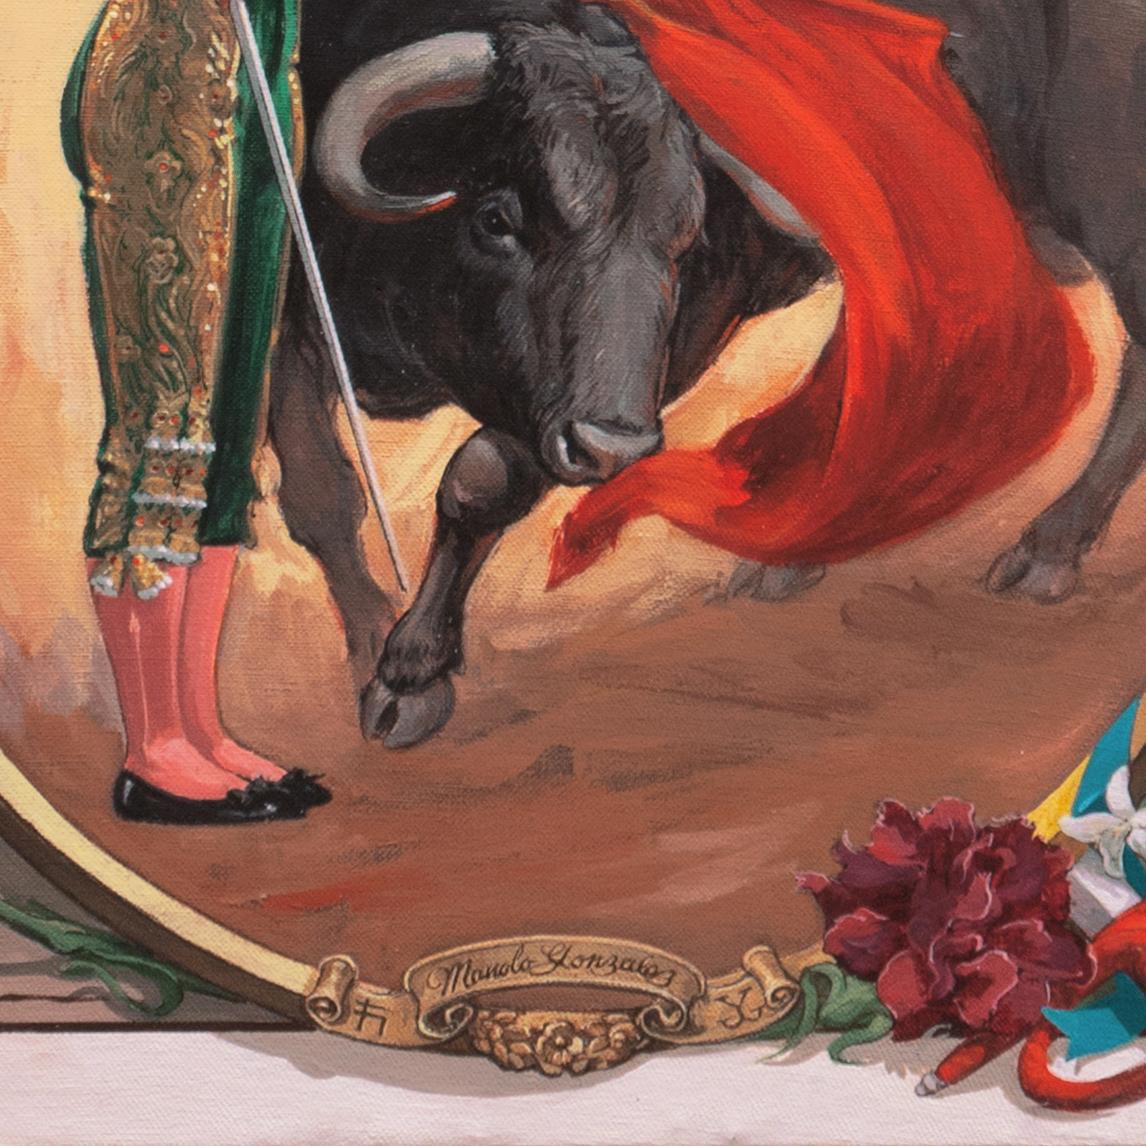 'Manolo Gonzalez' Plaza de Toros, Maestranza, Seville, Bullfighting, Matador - Brown Portrait Painting by John Fulton